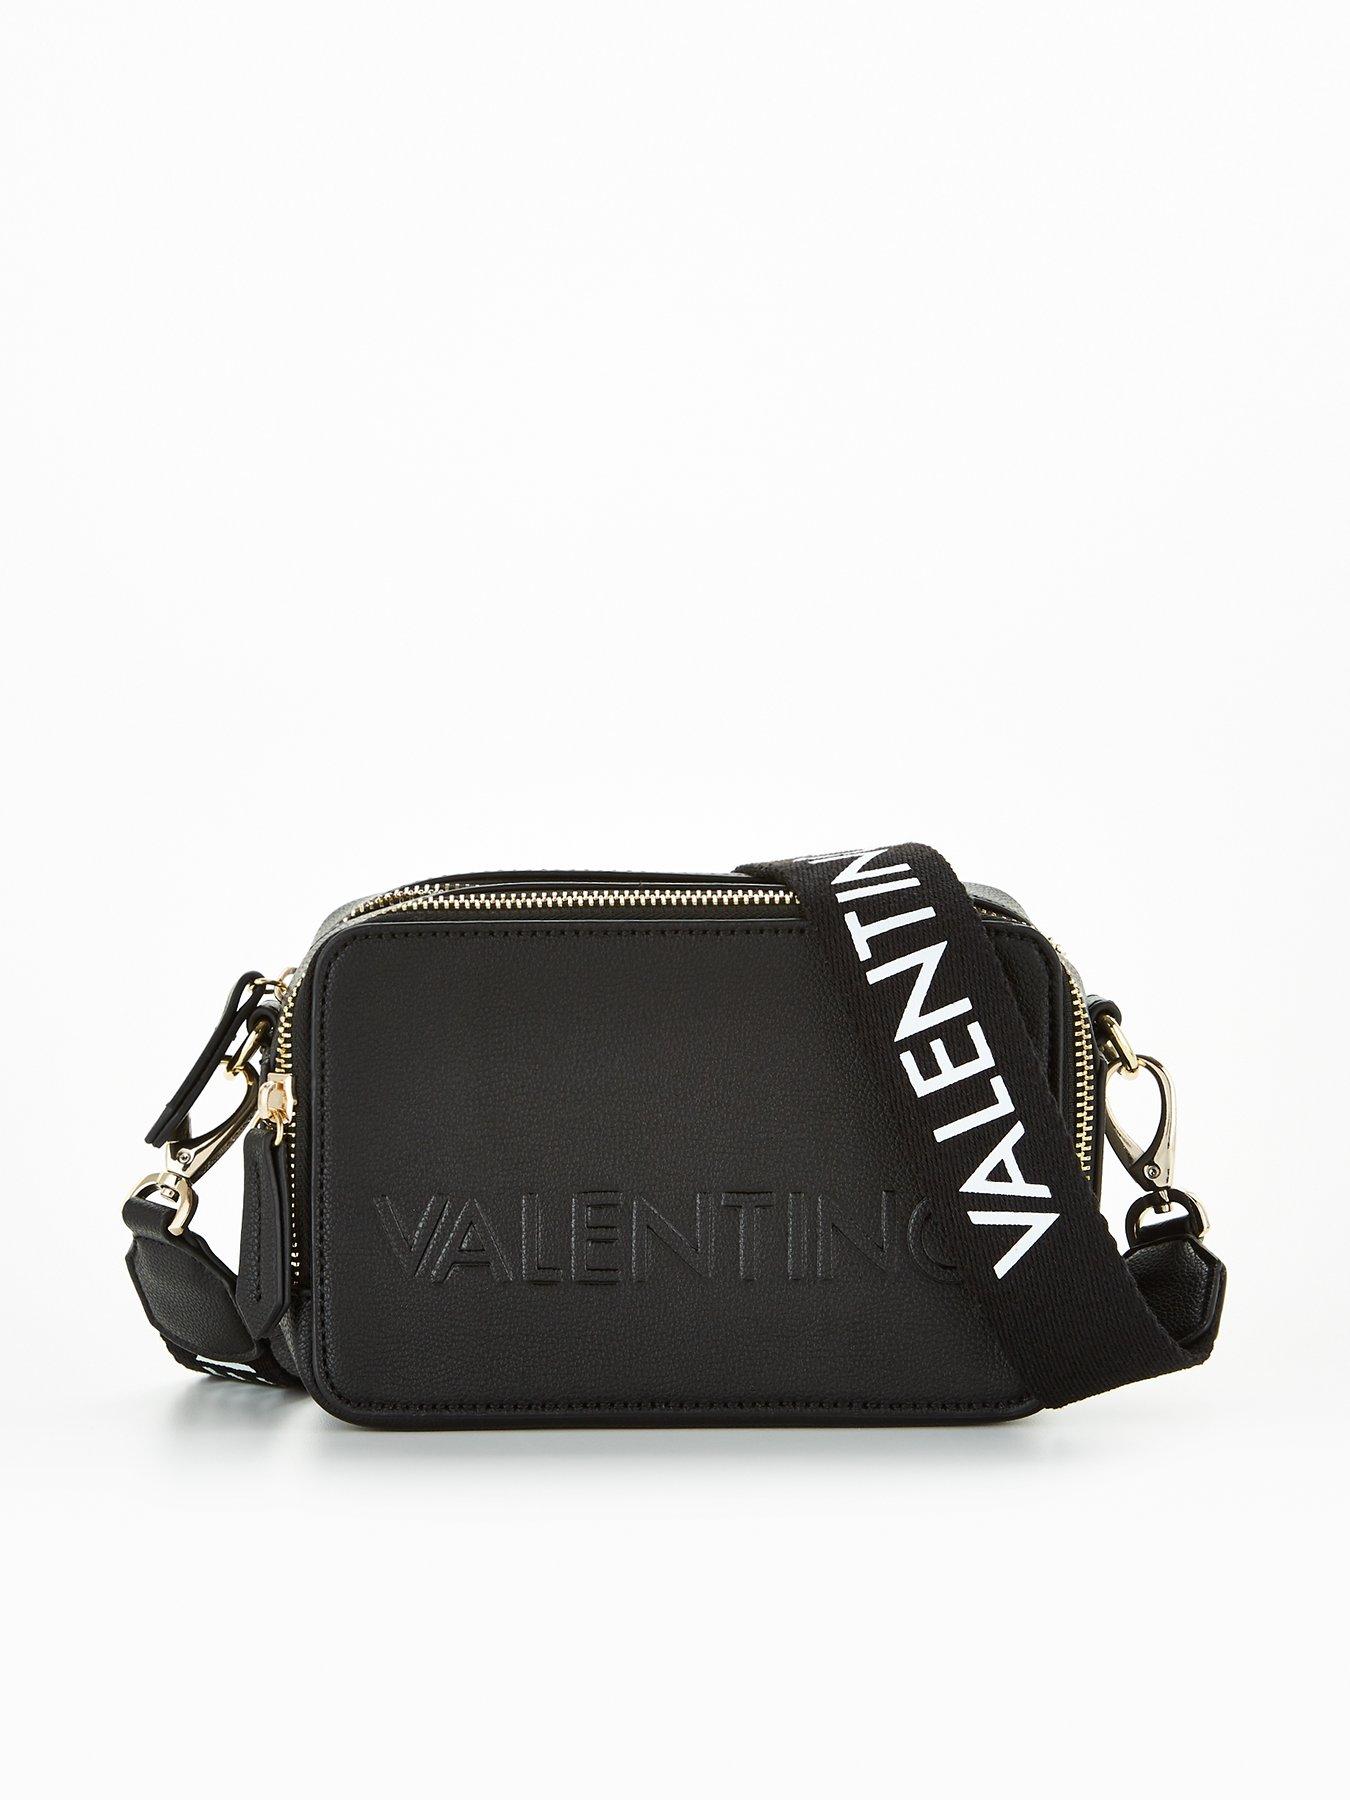 Black Valentino Cross Body Bag